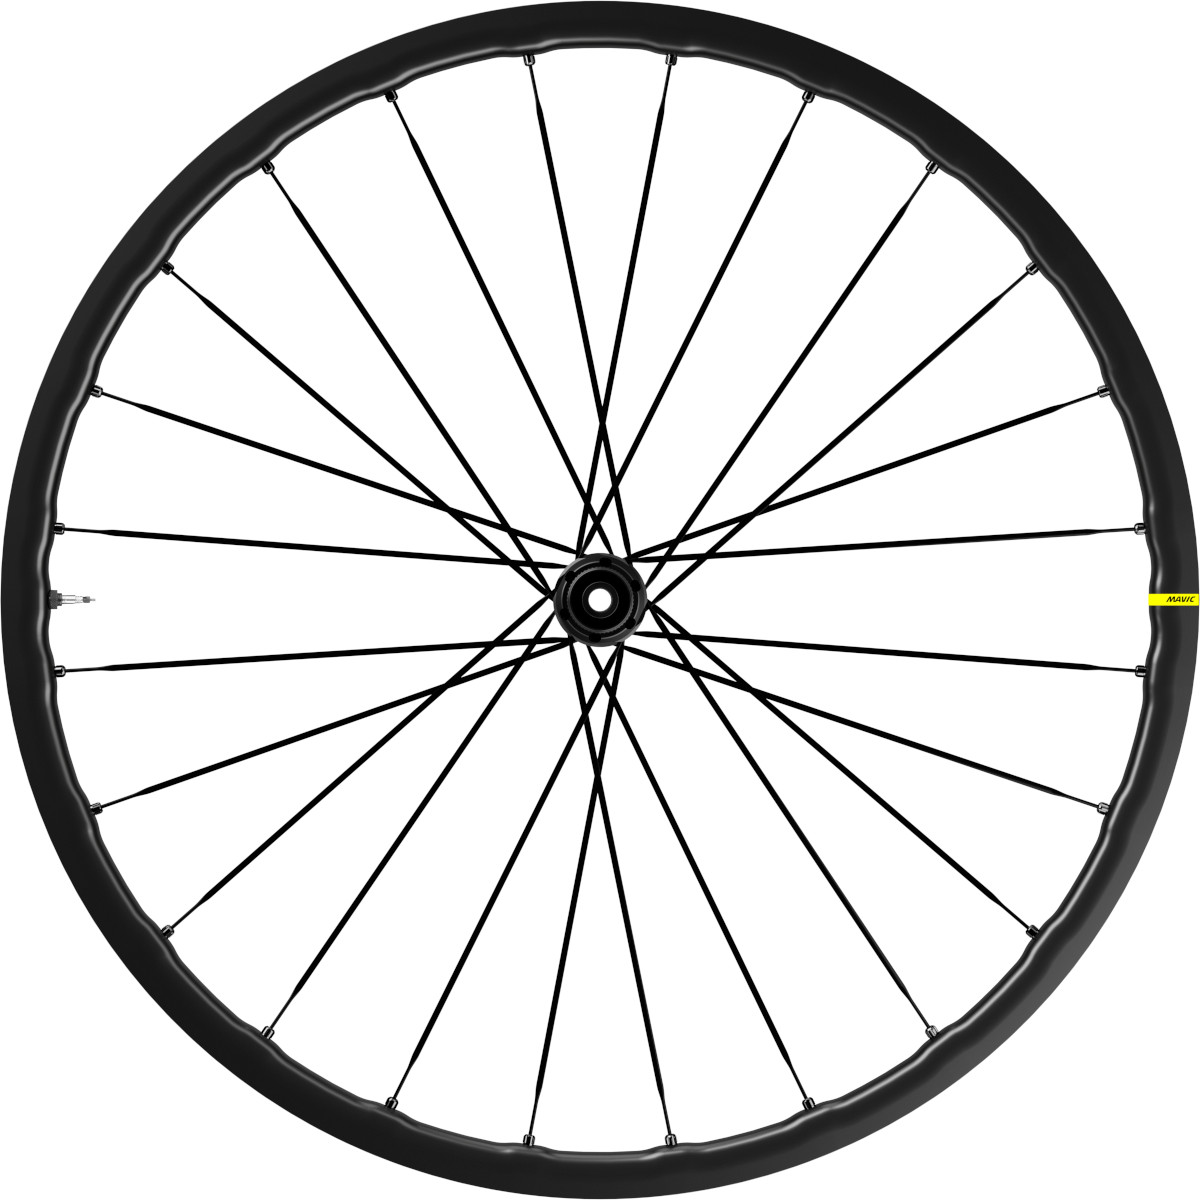 Picture of Mavic Ksyrium SL Disc UST Front Wheel | Centerlock | 12x100mm/QR - black